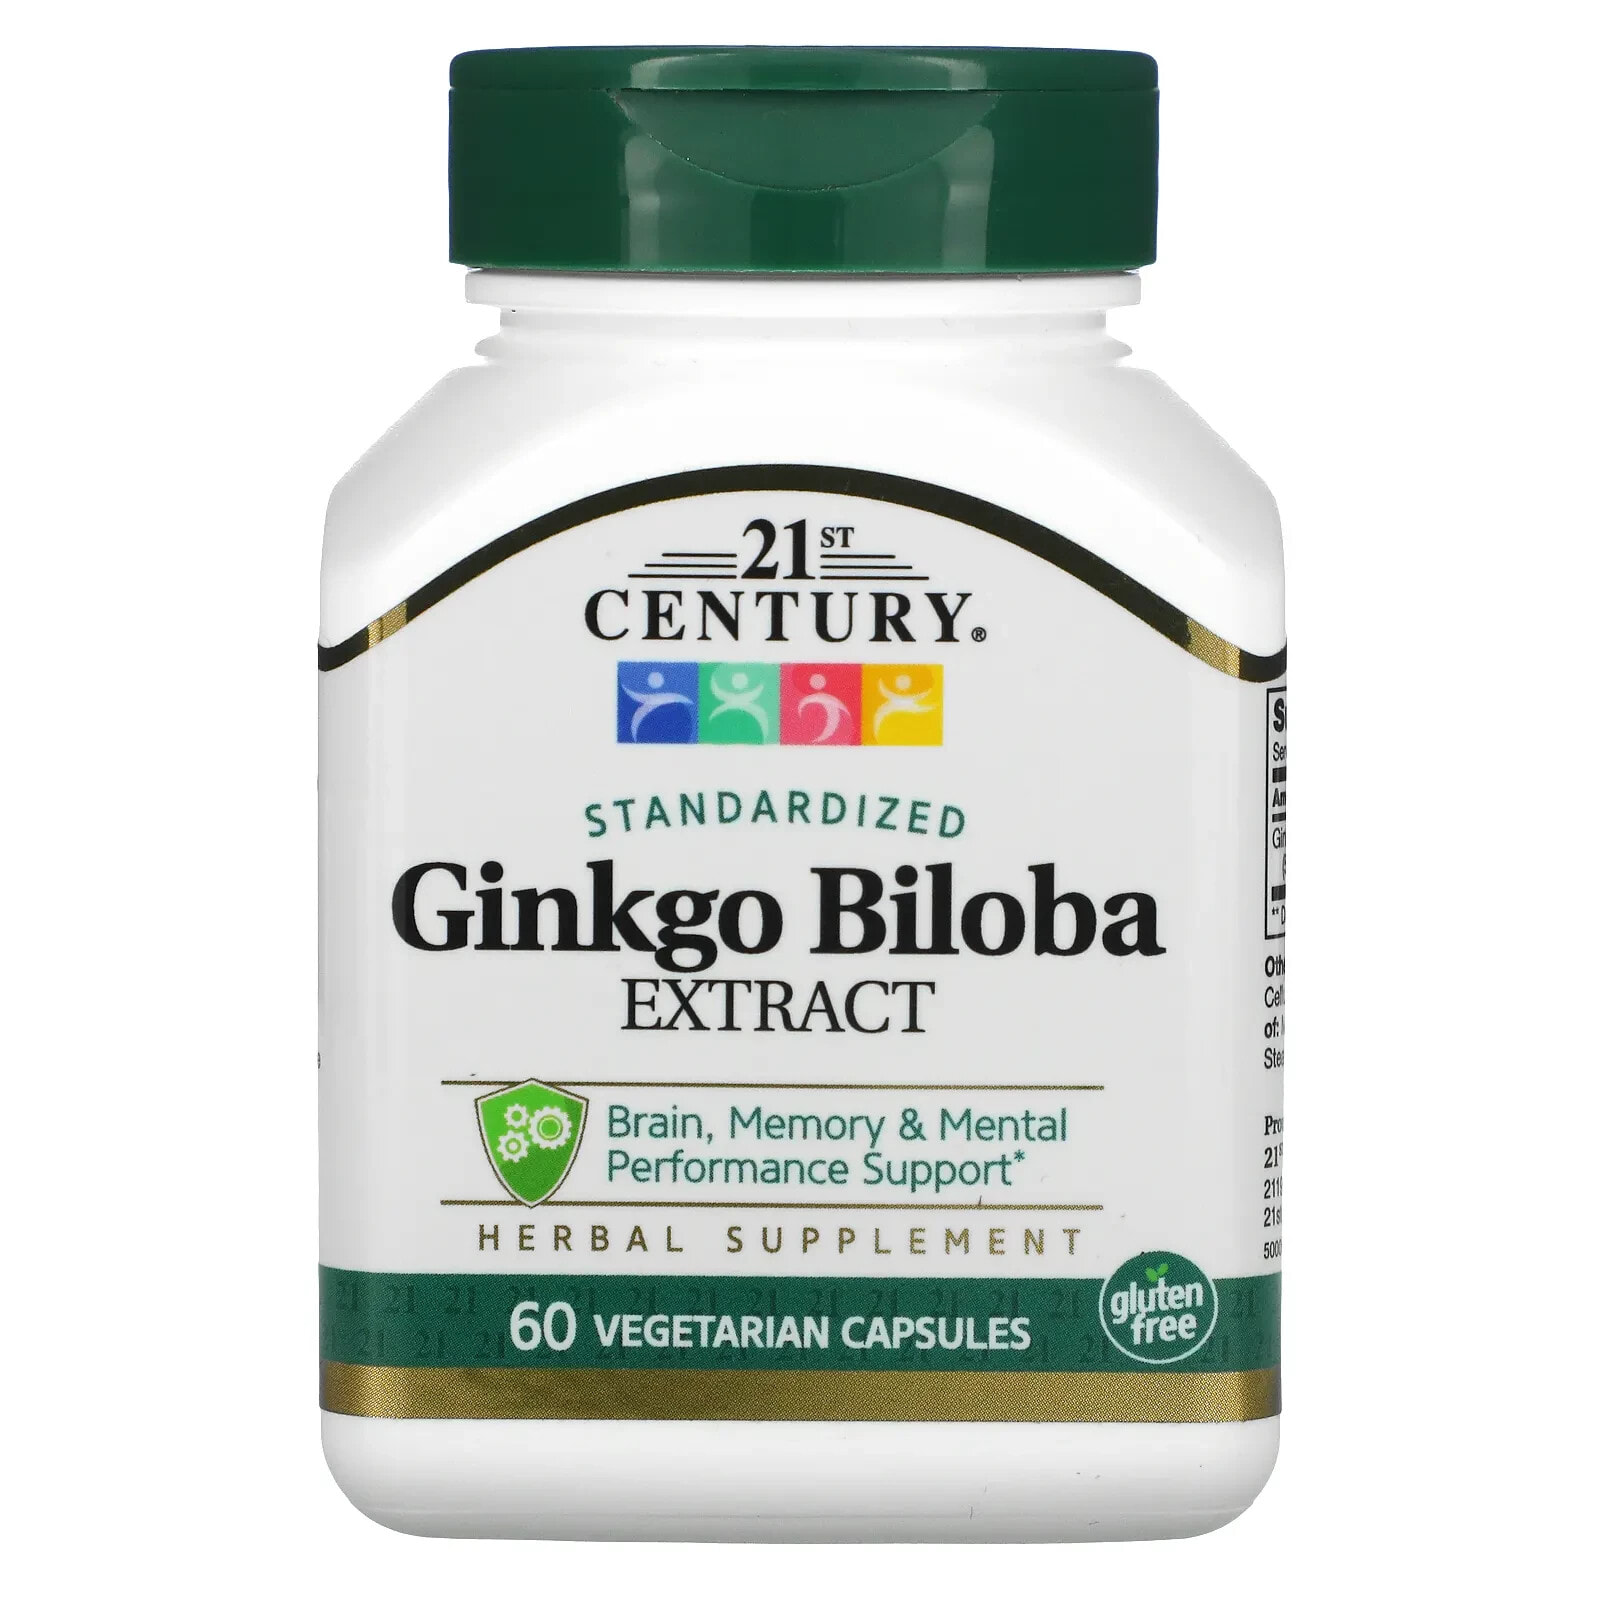 21st Century, Ginkgo Biloba Extract, Standardized, 200 Vegetarian Capsules